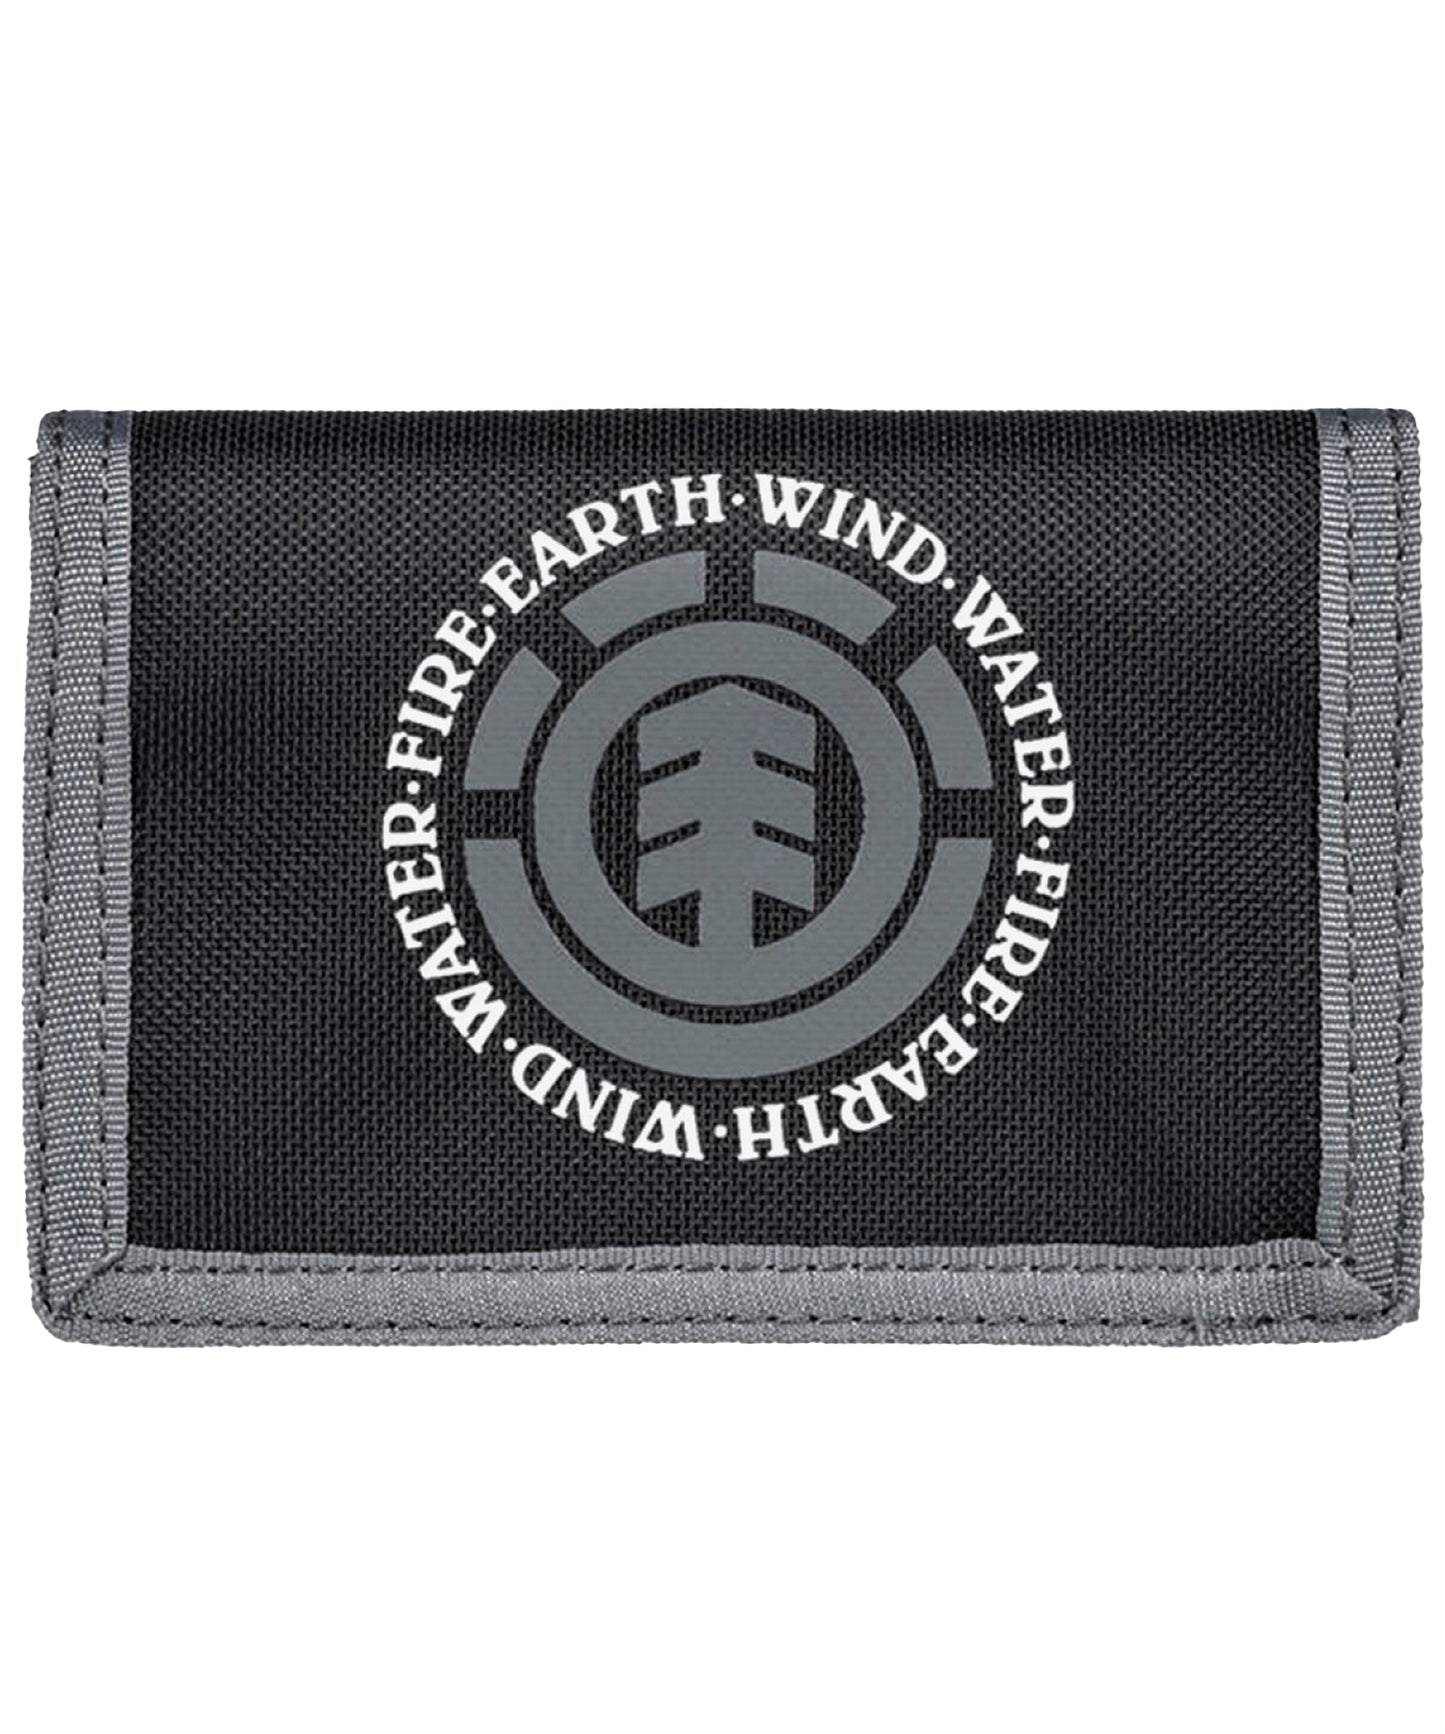 element-cartera tri-fold-army-billetera de tres hojas color-negro-ribete-gris-loneta de poliéster-logo element en el centro.